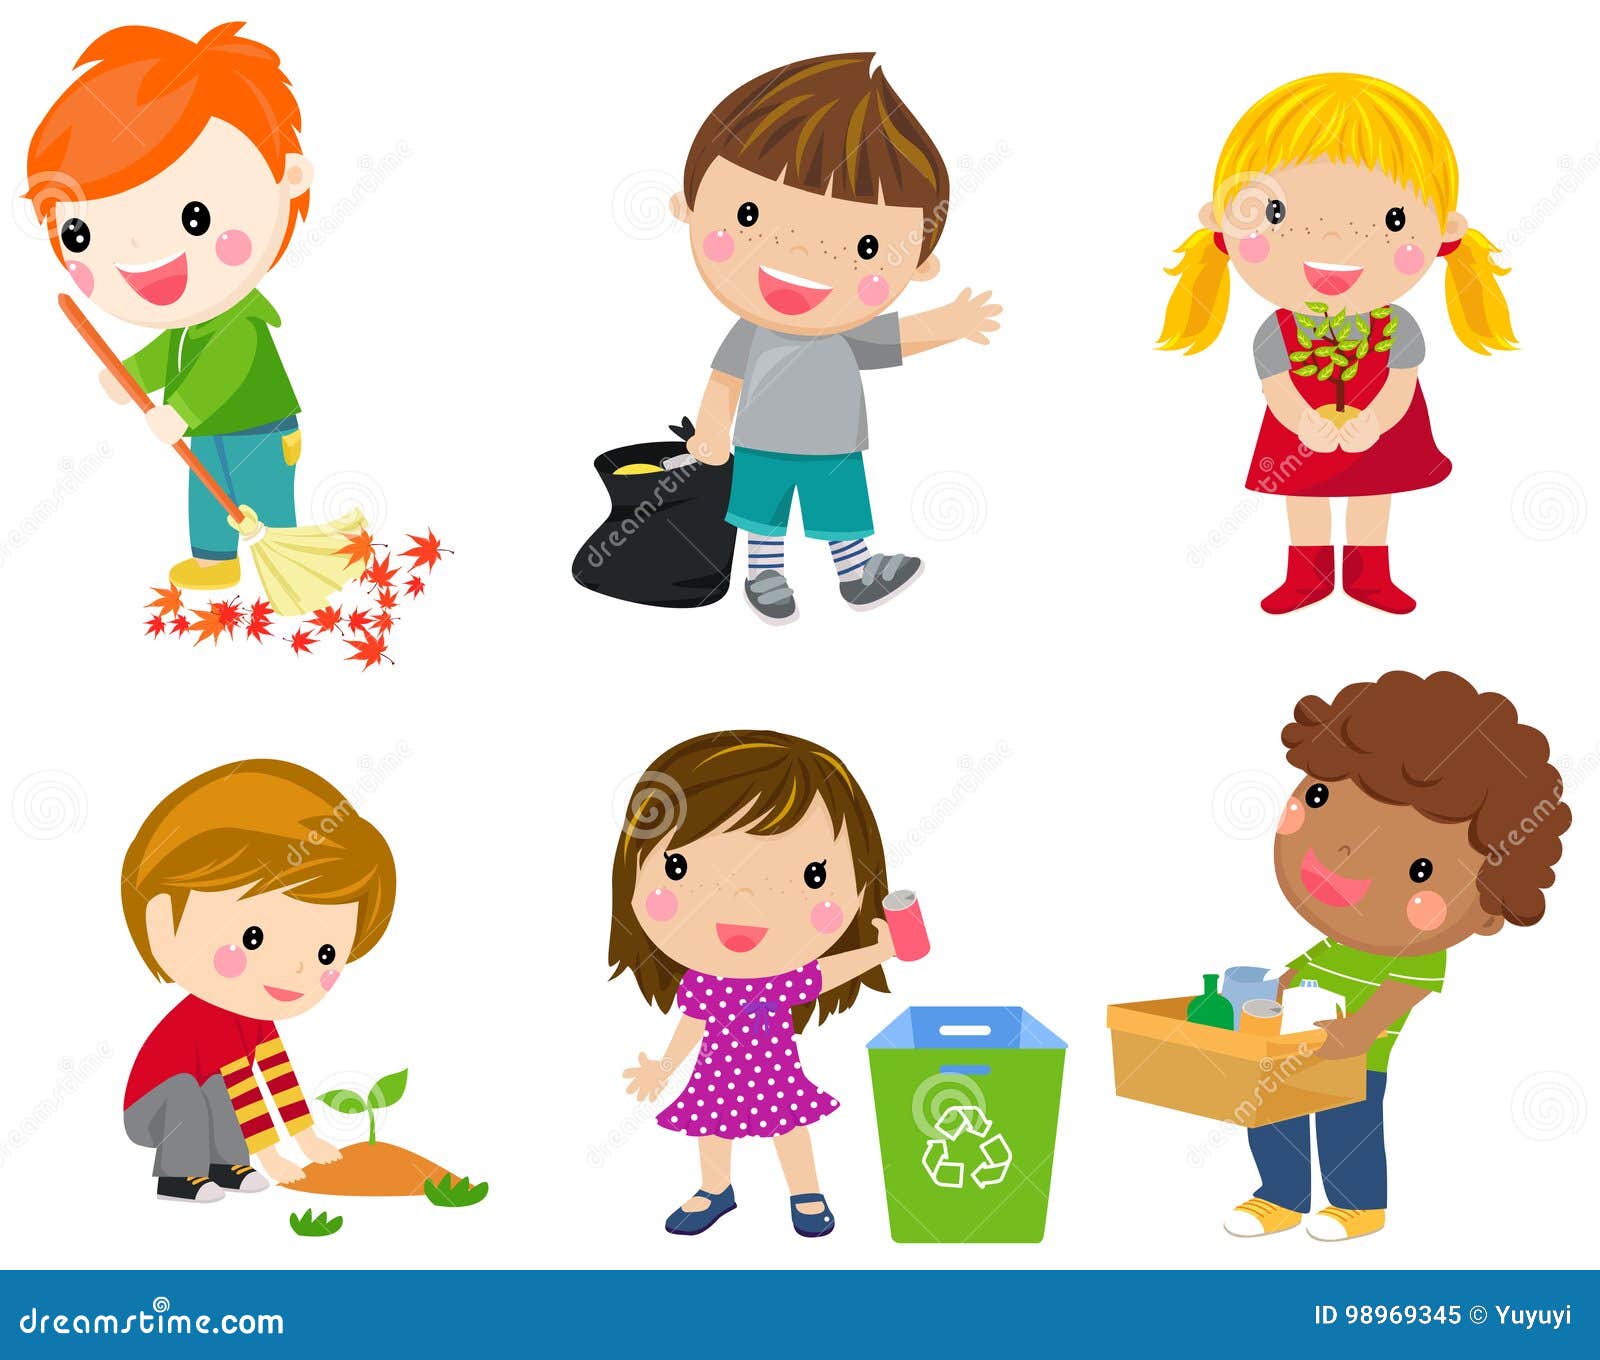 Children illustration stock illustration. Illustration of recycle ...